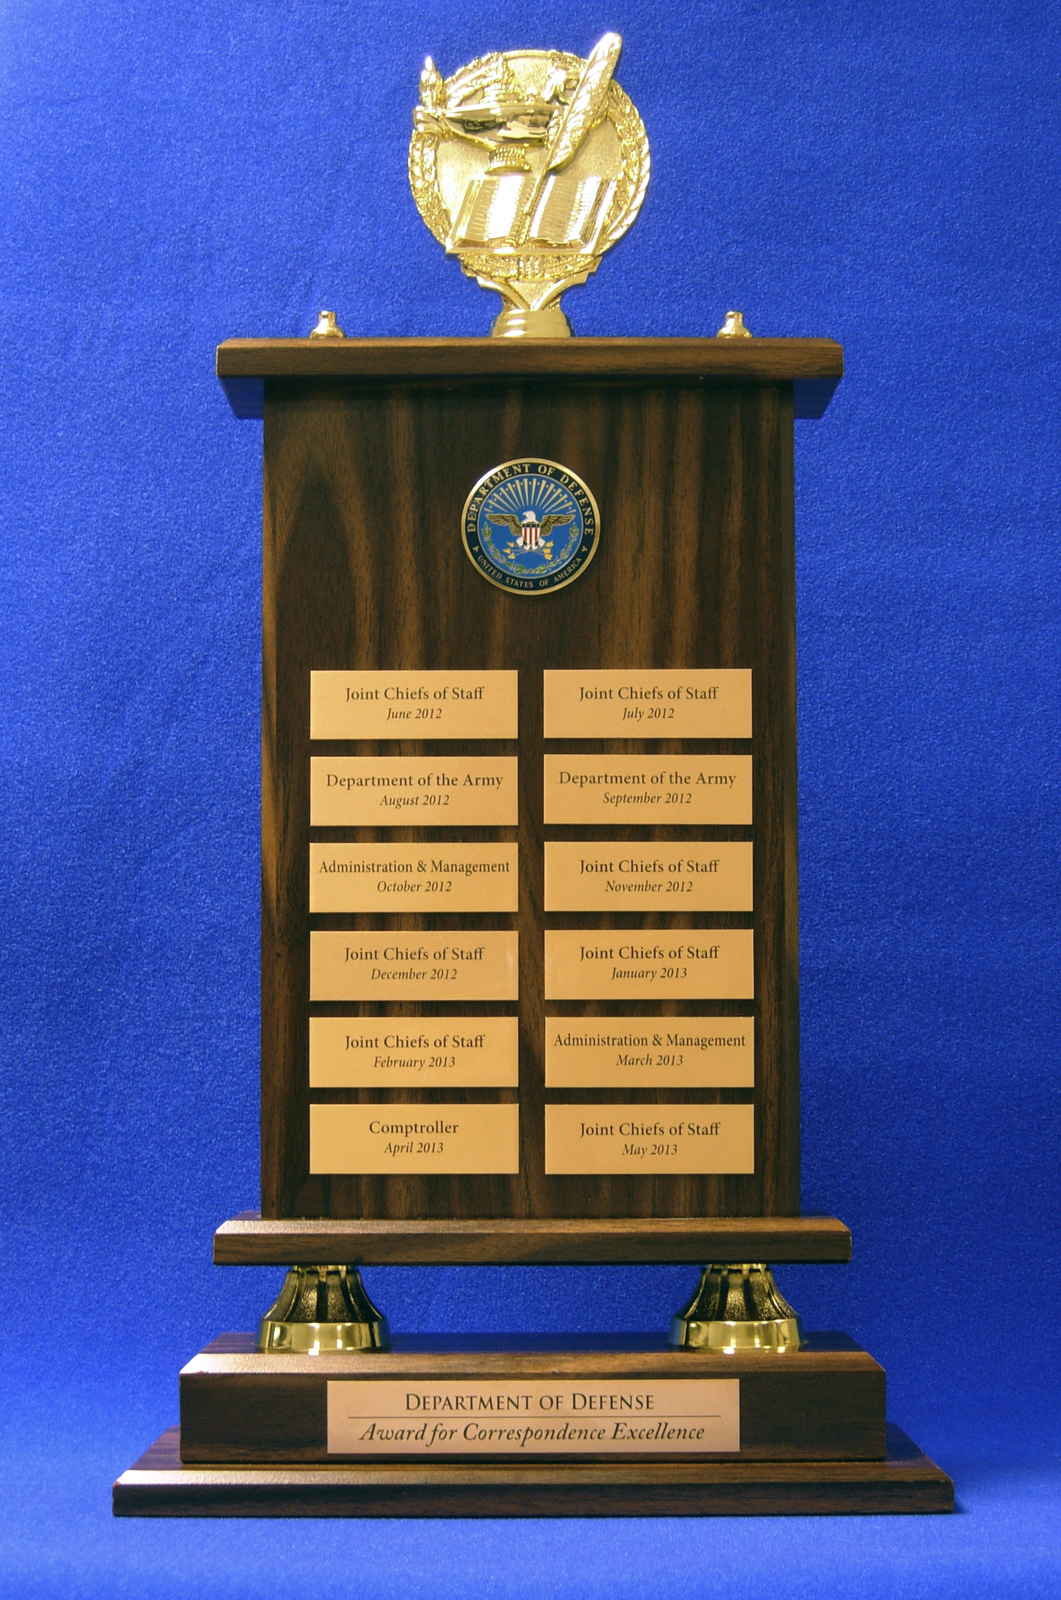 Correspondence Trophy